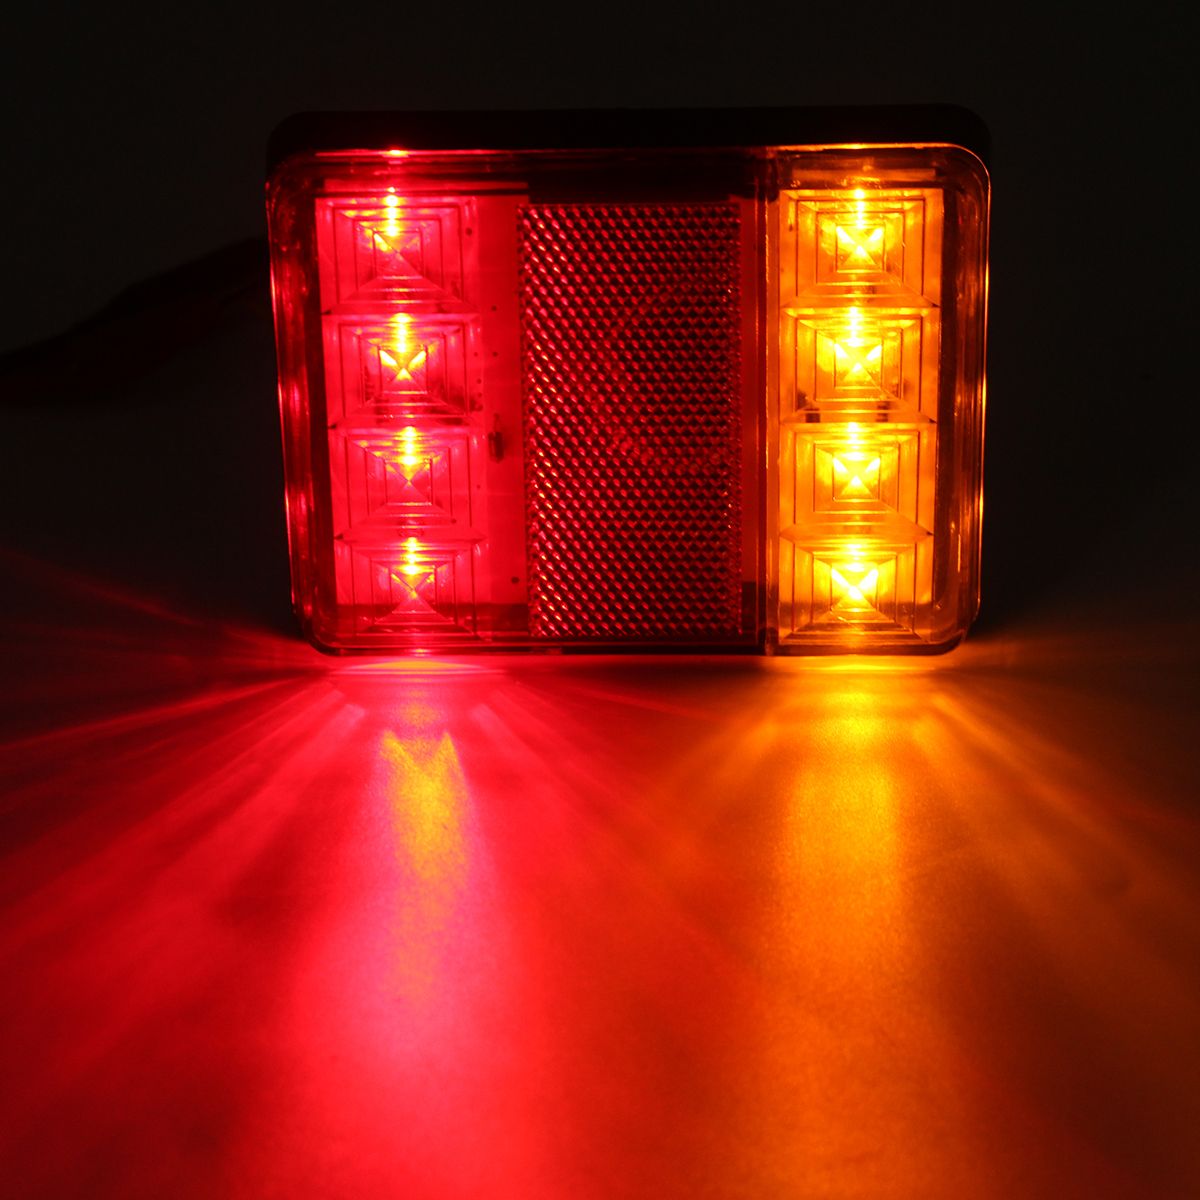 12V-8-LED-Car-Truck-LED-Rear-Tail-Brake-Lights-Warning-Turn-Signal-Lamp-RedYellow-2PCS-for-Lorry-Tra-956751